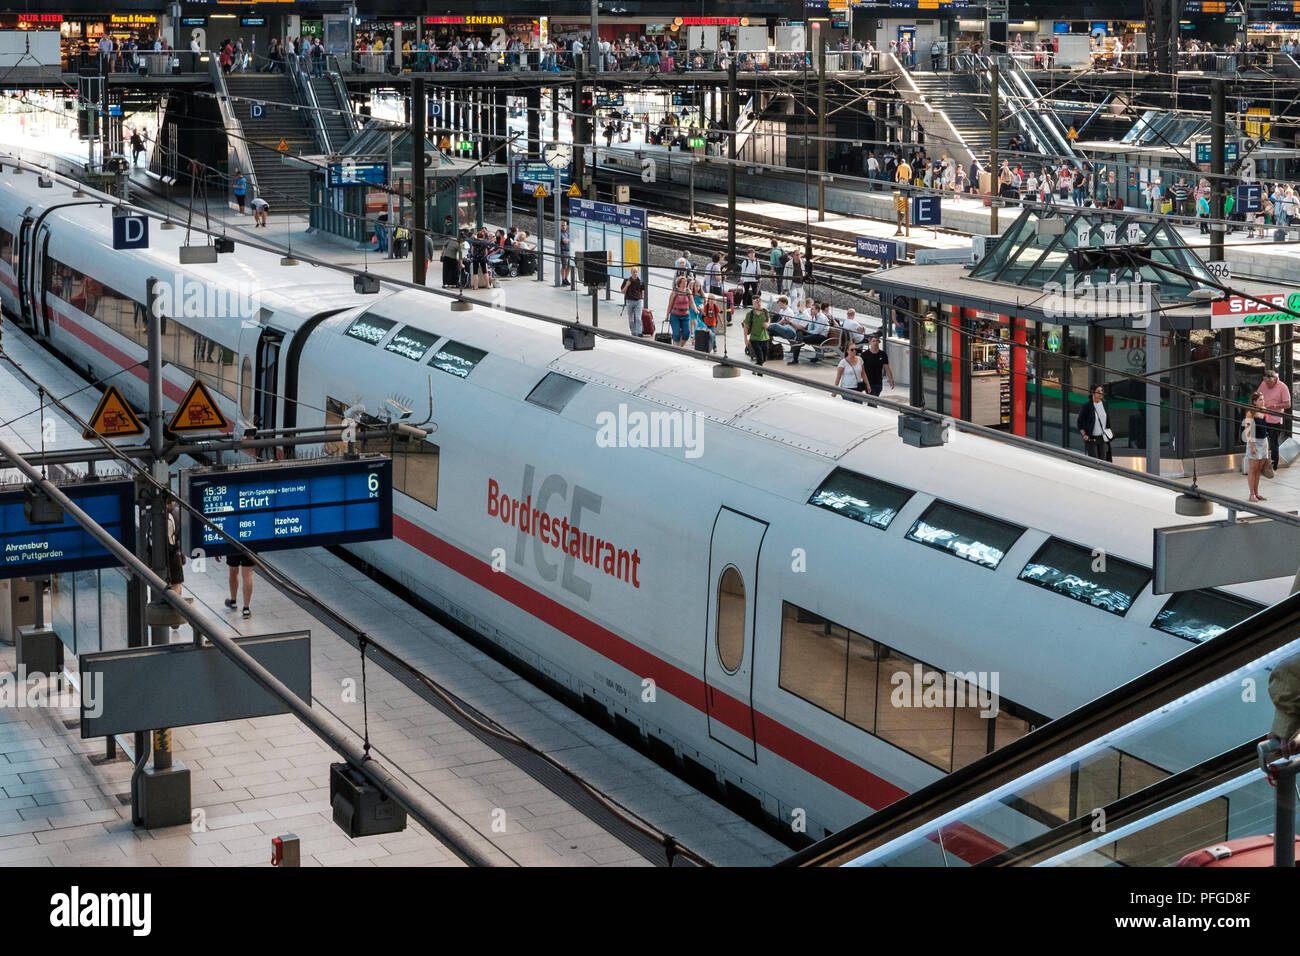 Hamburg, Germany - august, 2018: Trains and passengers at main railway station in Hamburg Stock Photo